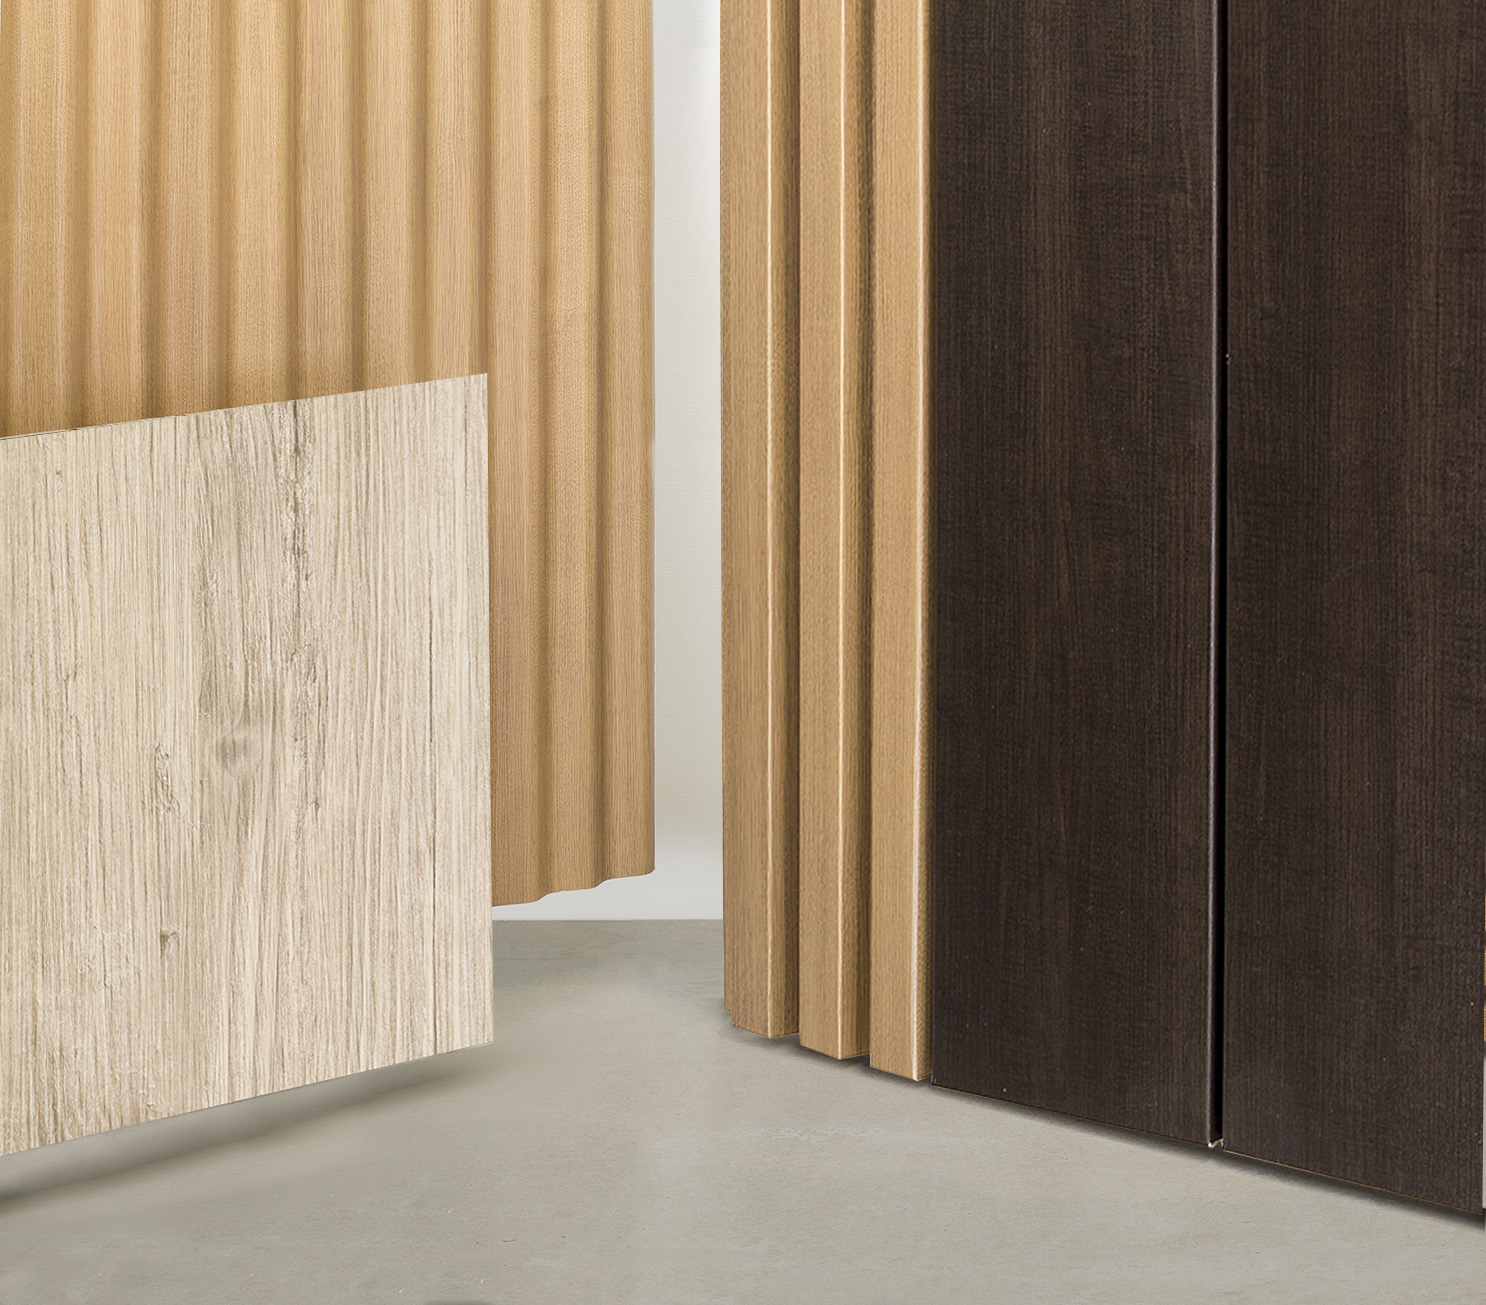 thin wood veneer sheets  0.2mm flat cut wood veneer for interior